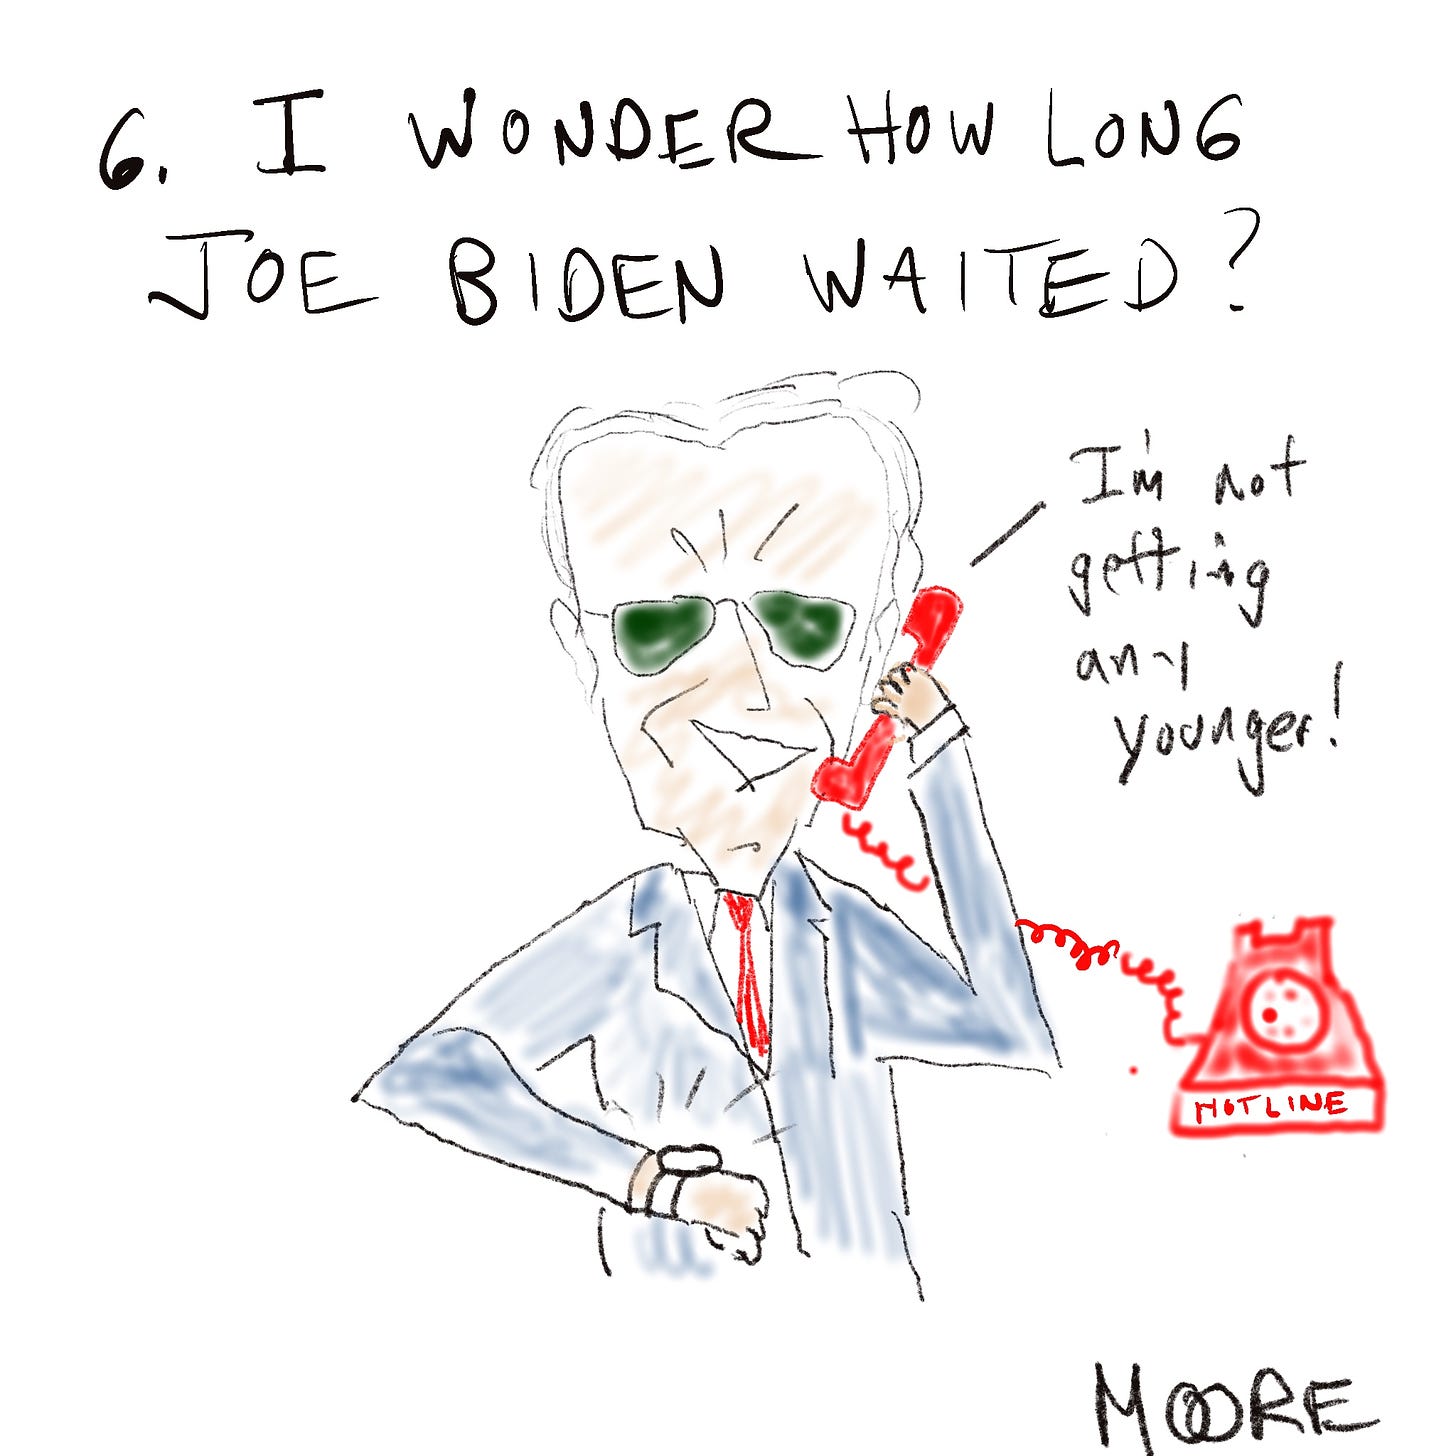 Joe Biden on the hotline